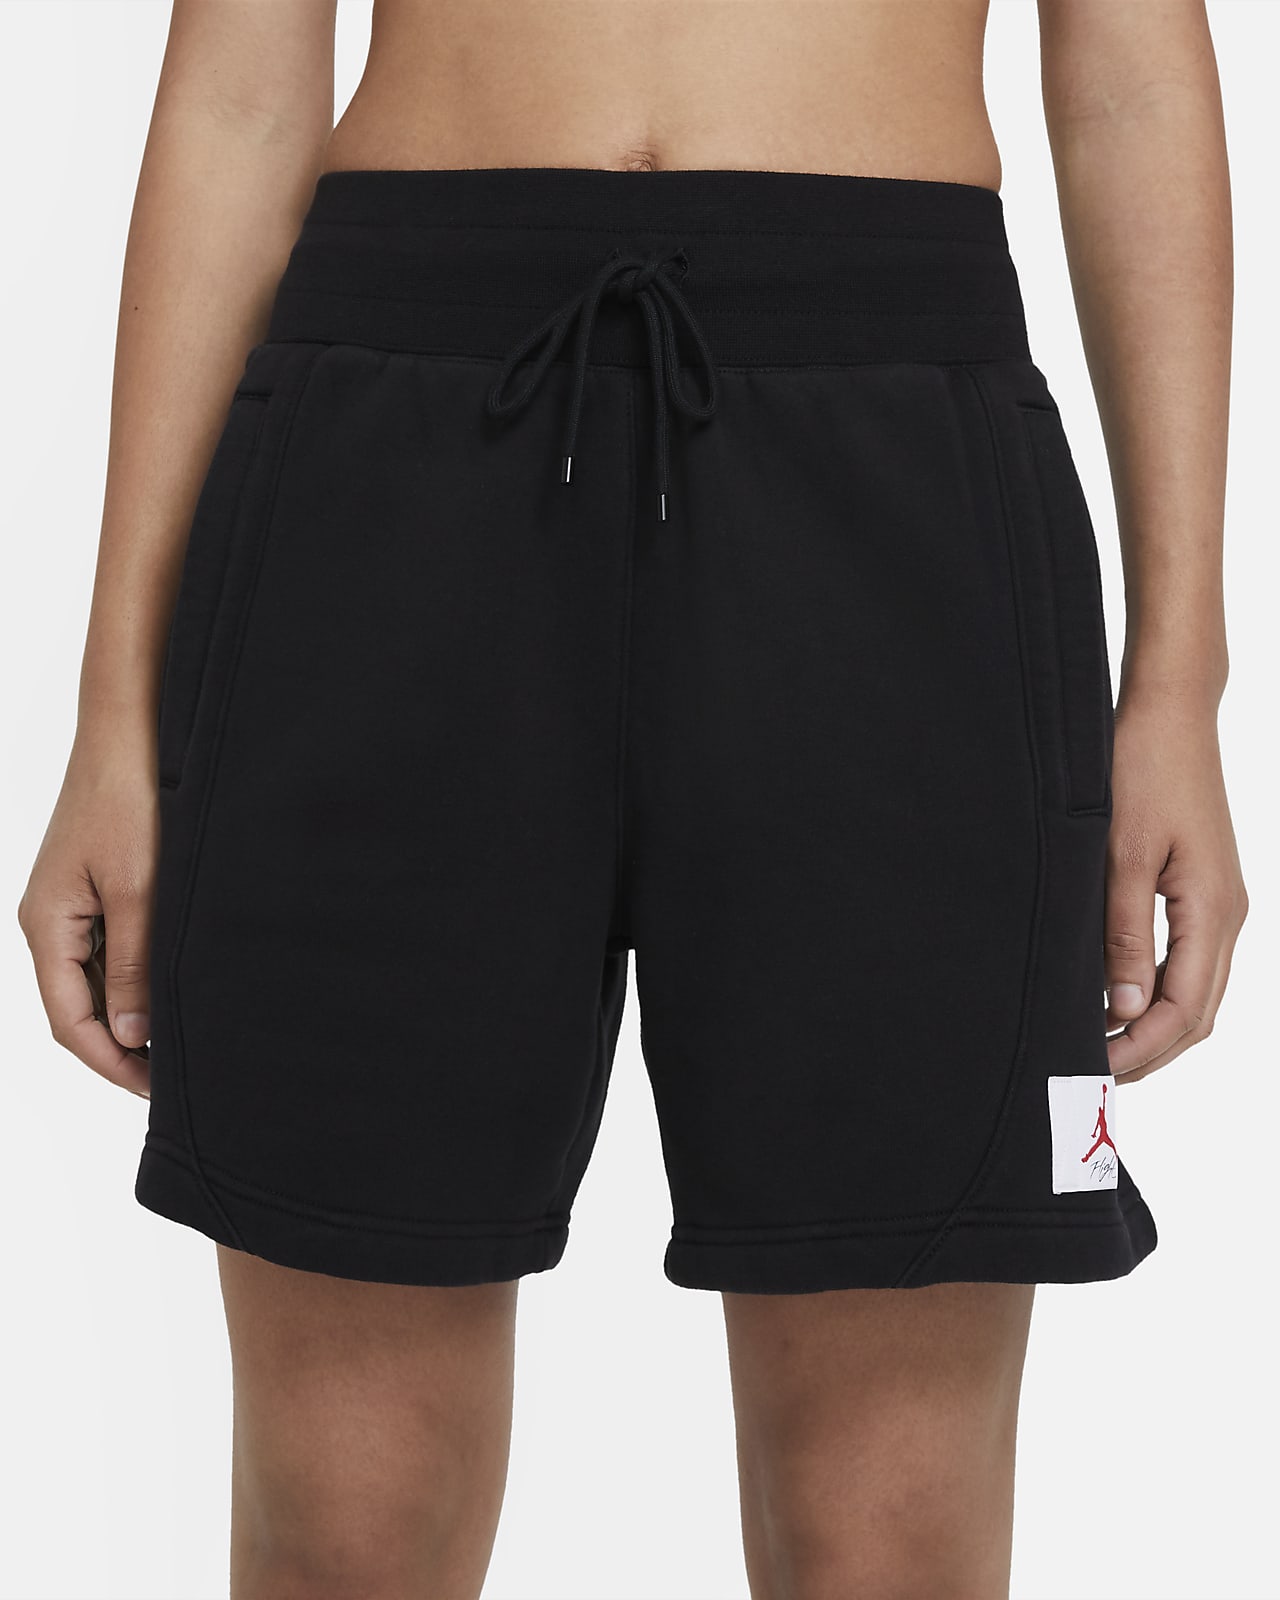 black jordan fleece shorts